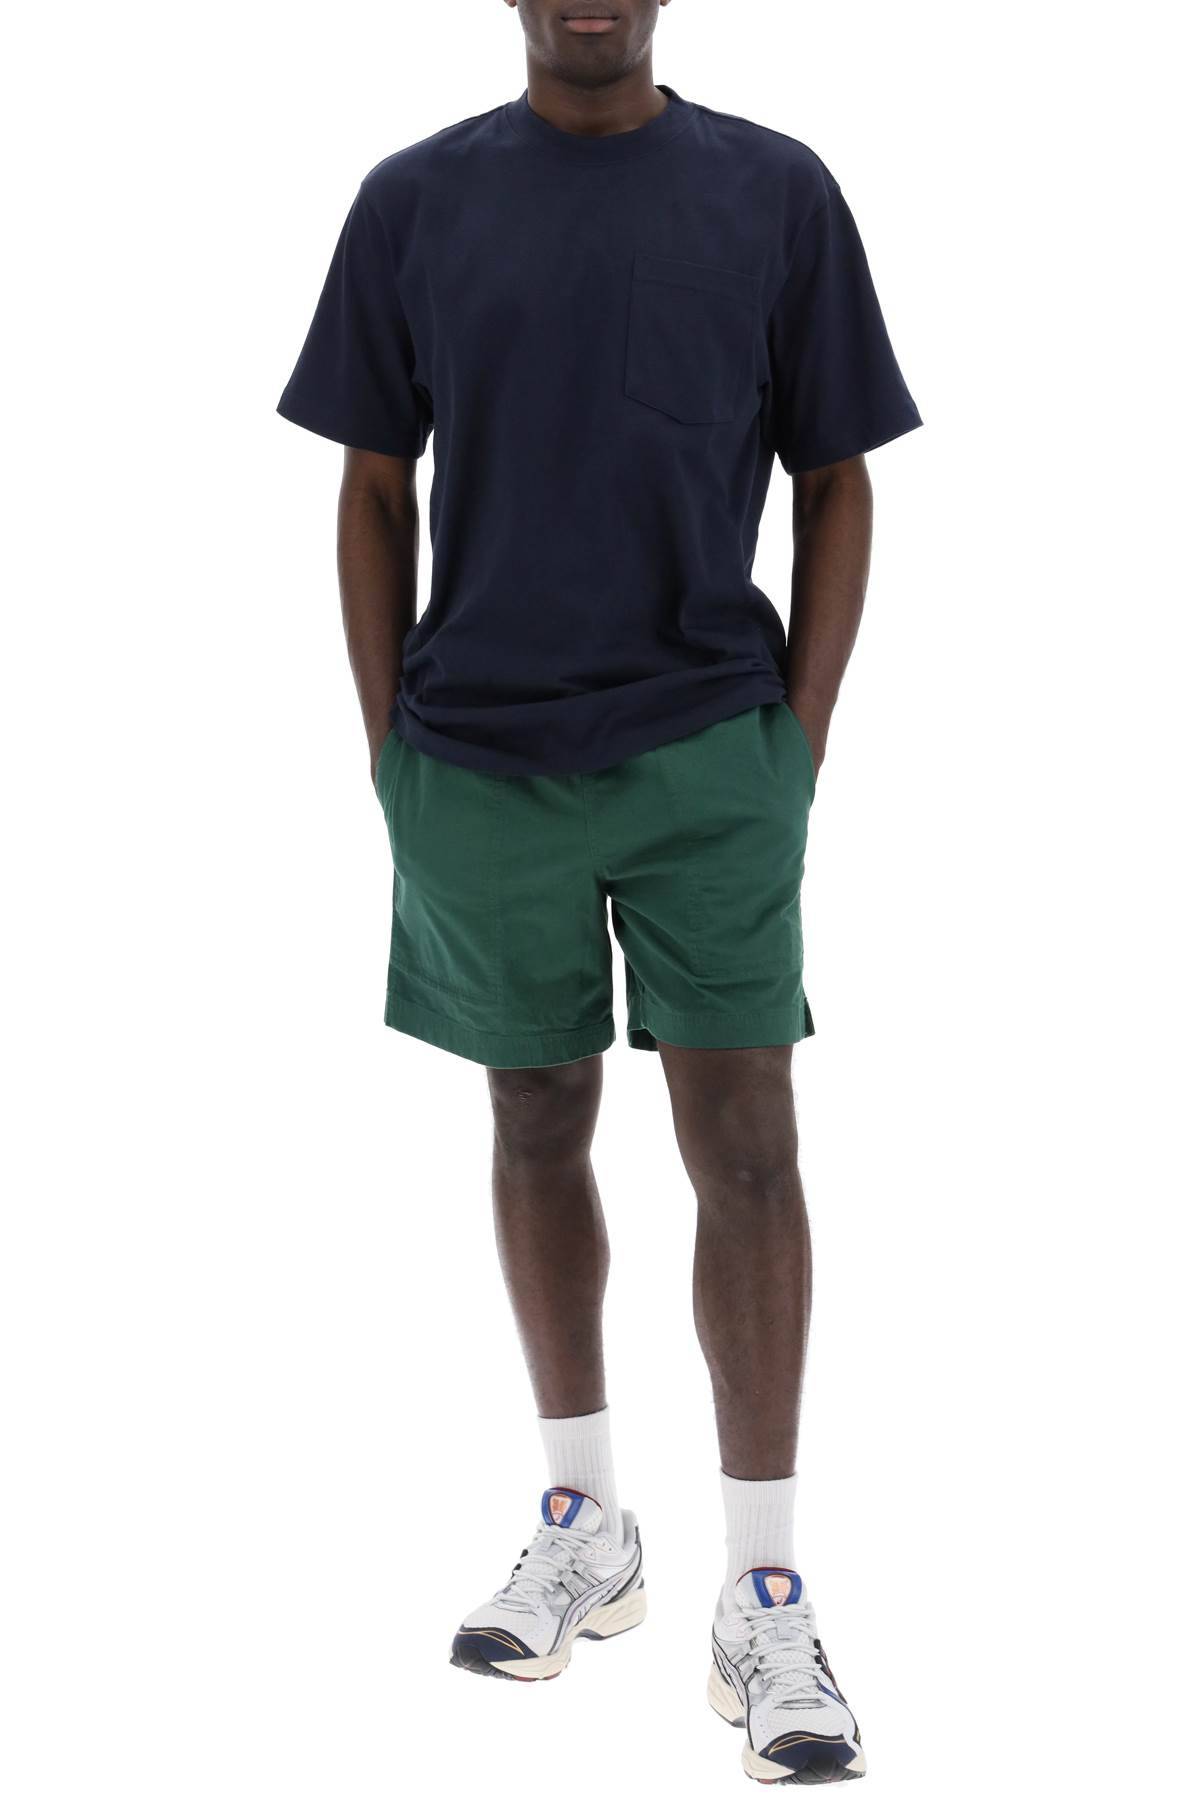 Shop Filson "mountain Pull On Bermuda Granite Shorts In Green